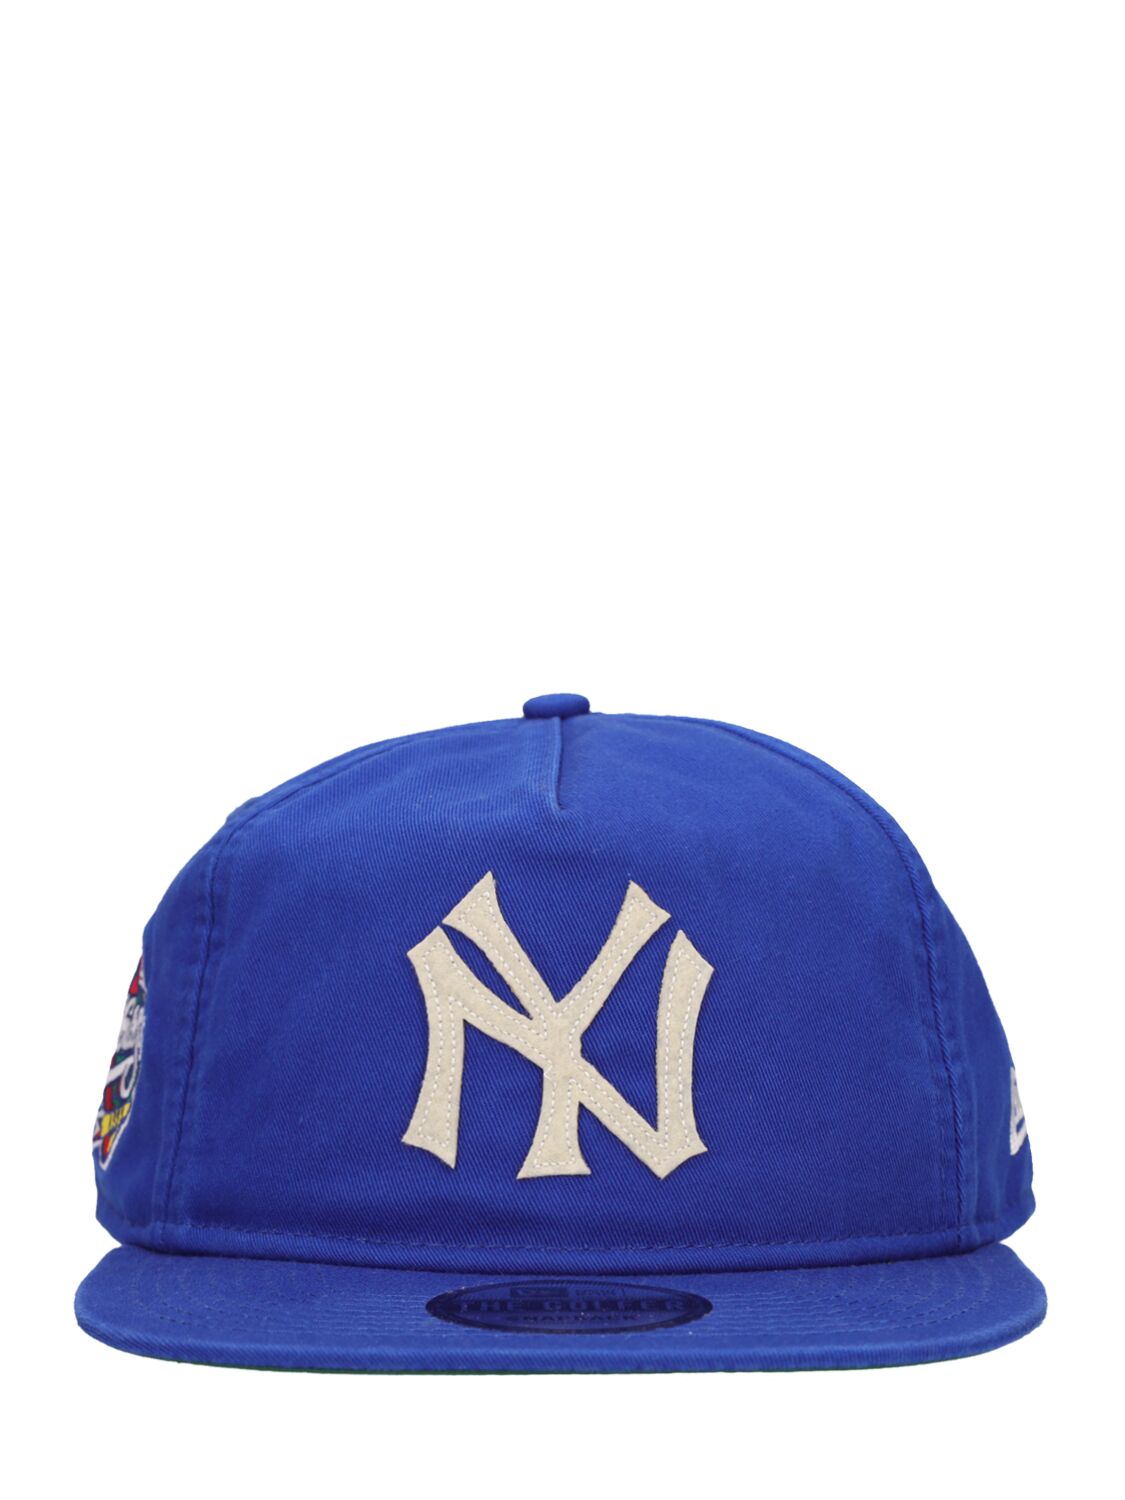 Ny Yankees Mlb World Series Golfer Cap – MEN > ACCESSORIES > HATS